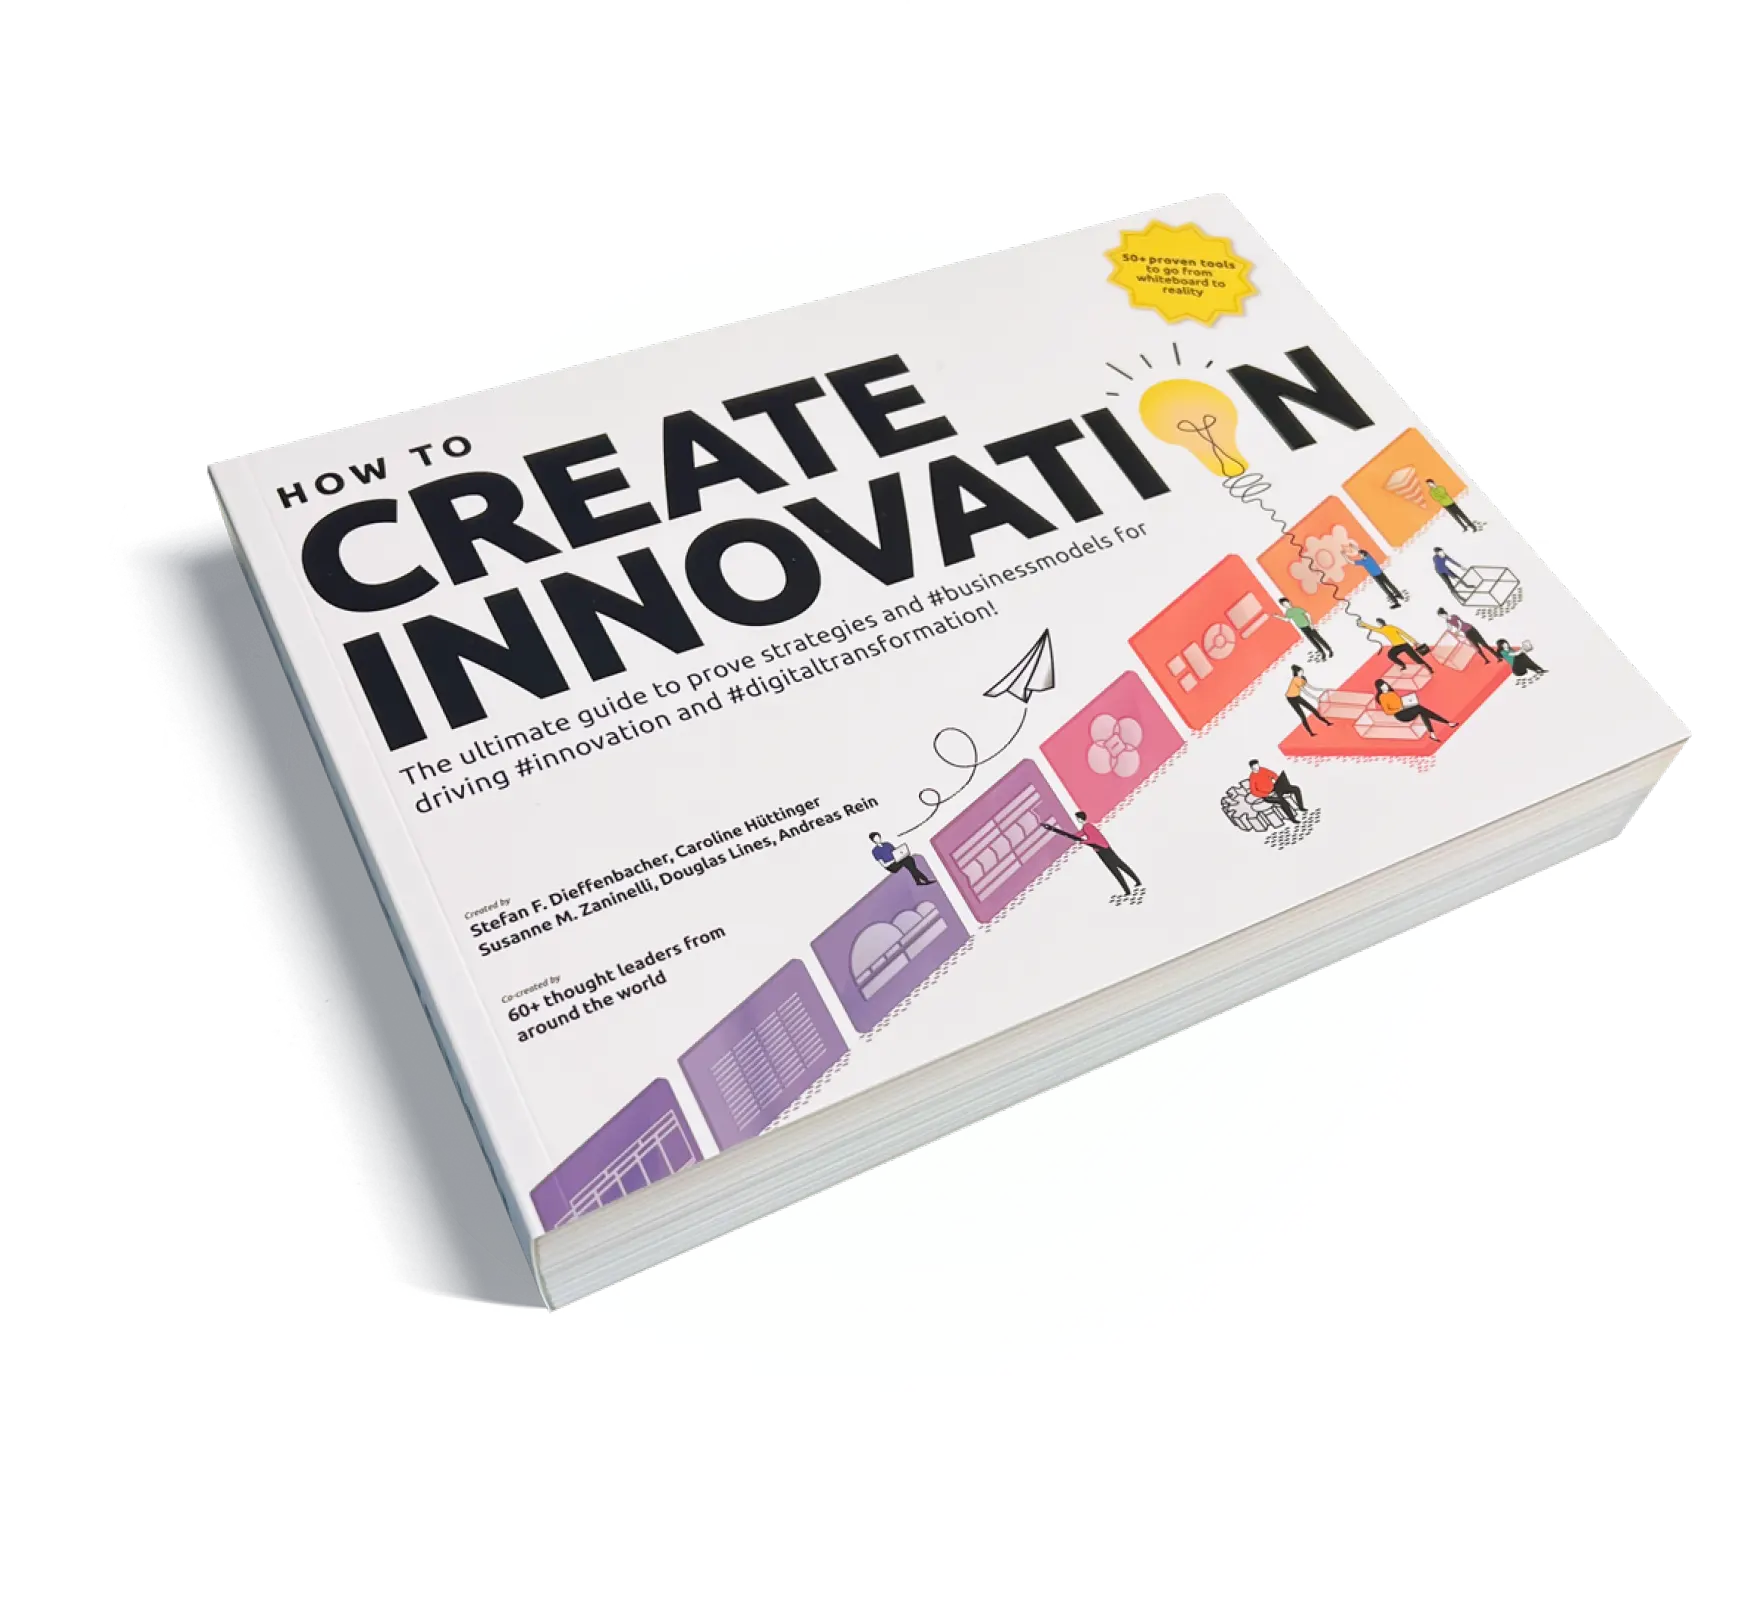 digitalleader ship create innovation book cover